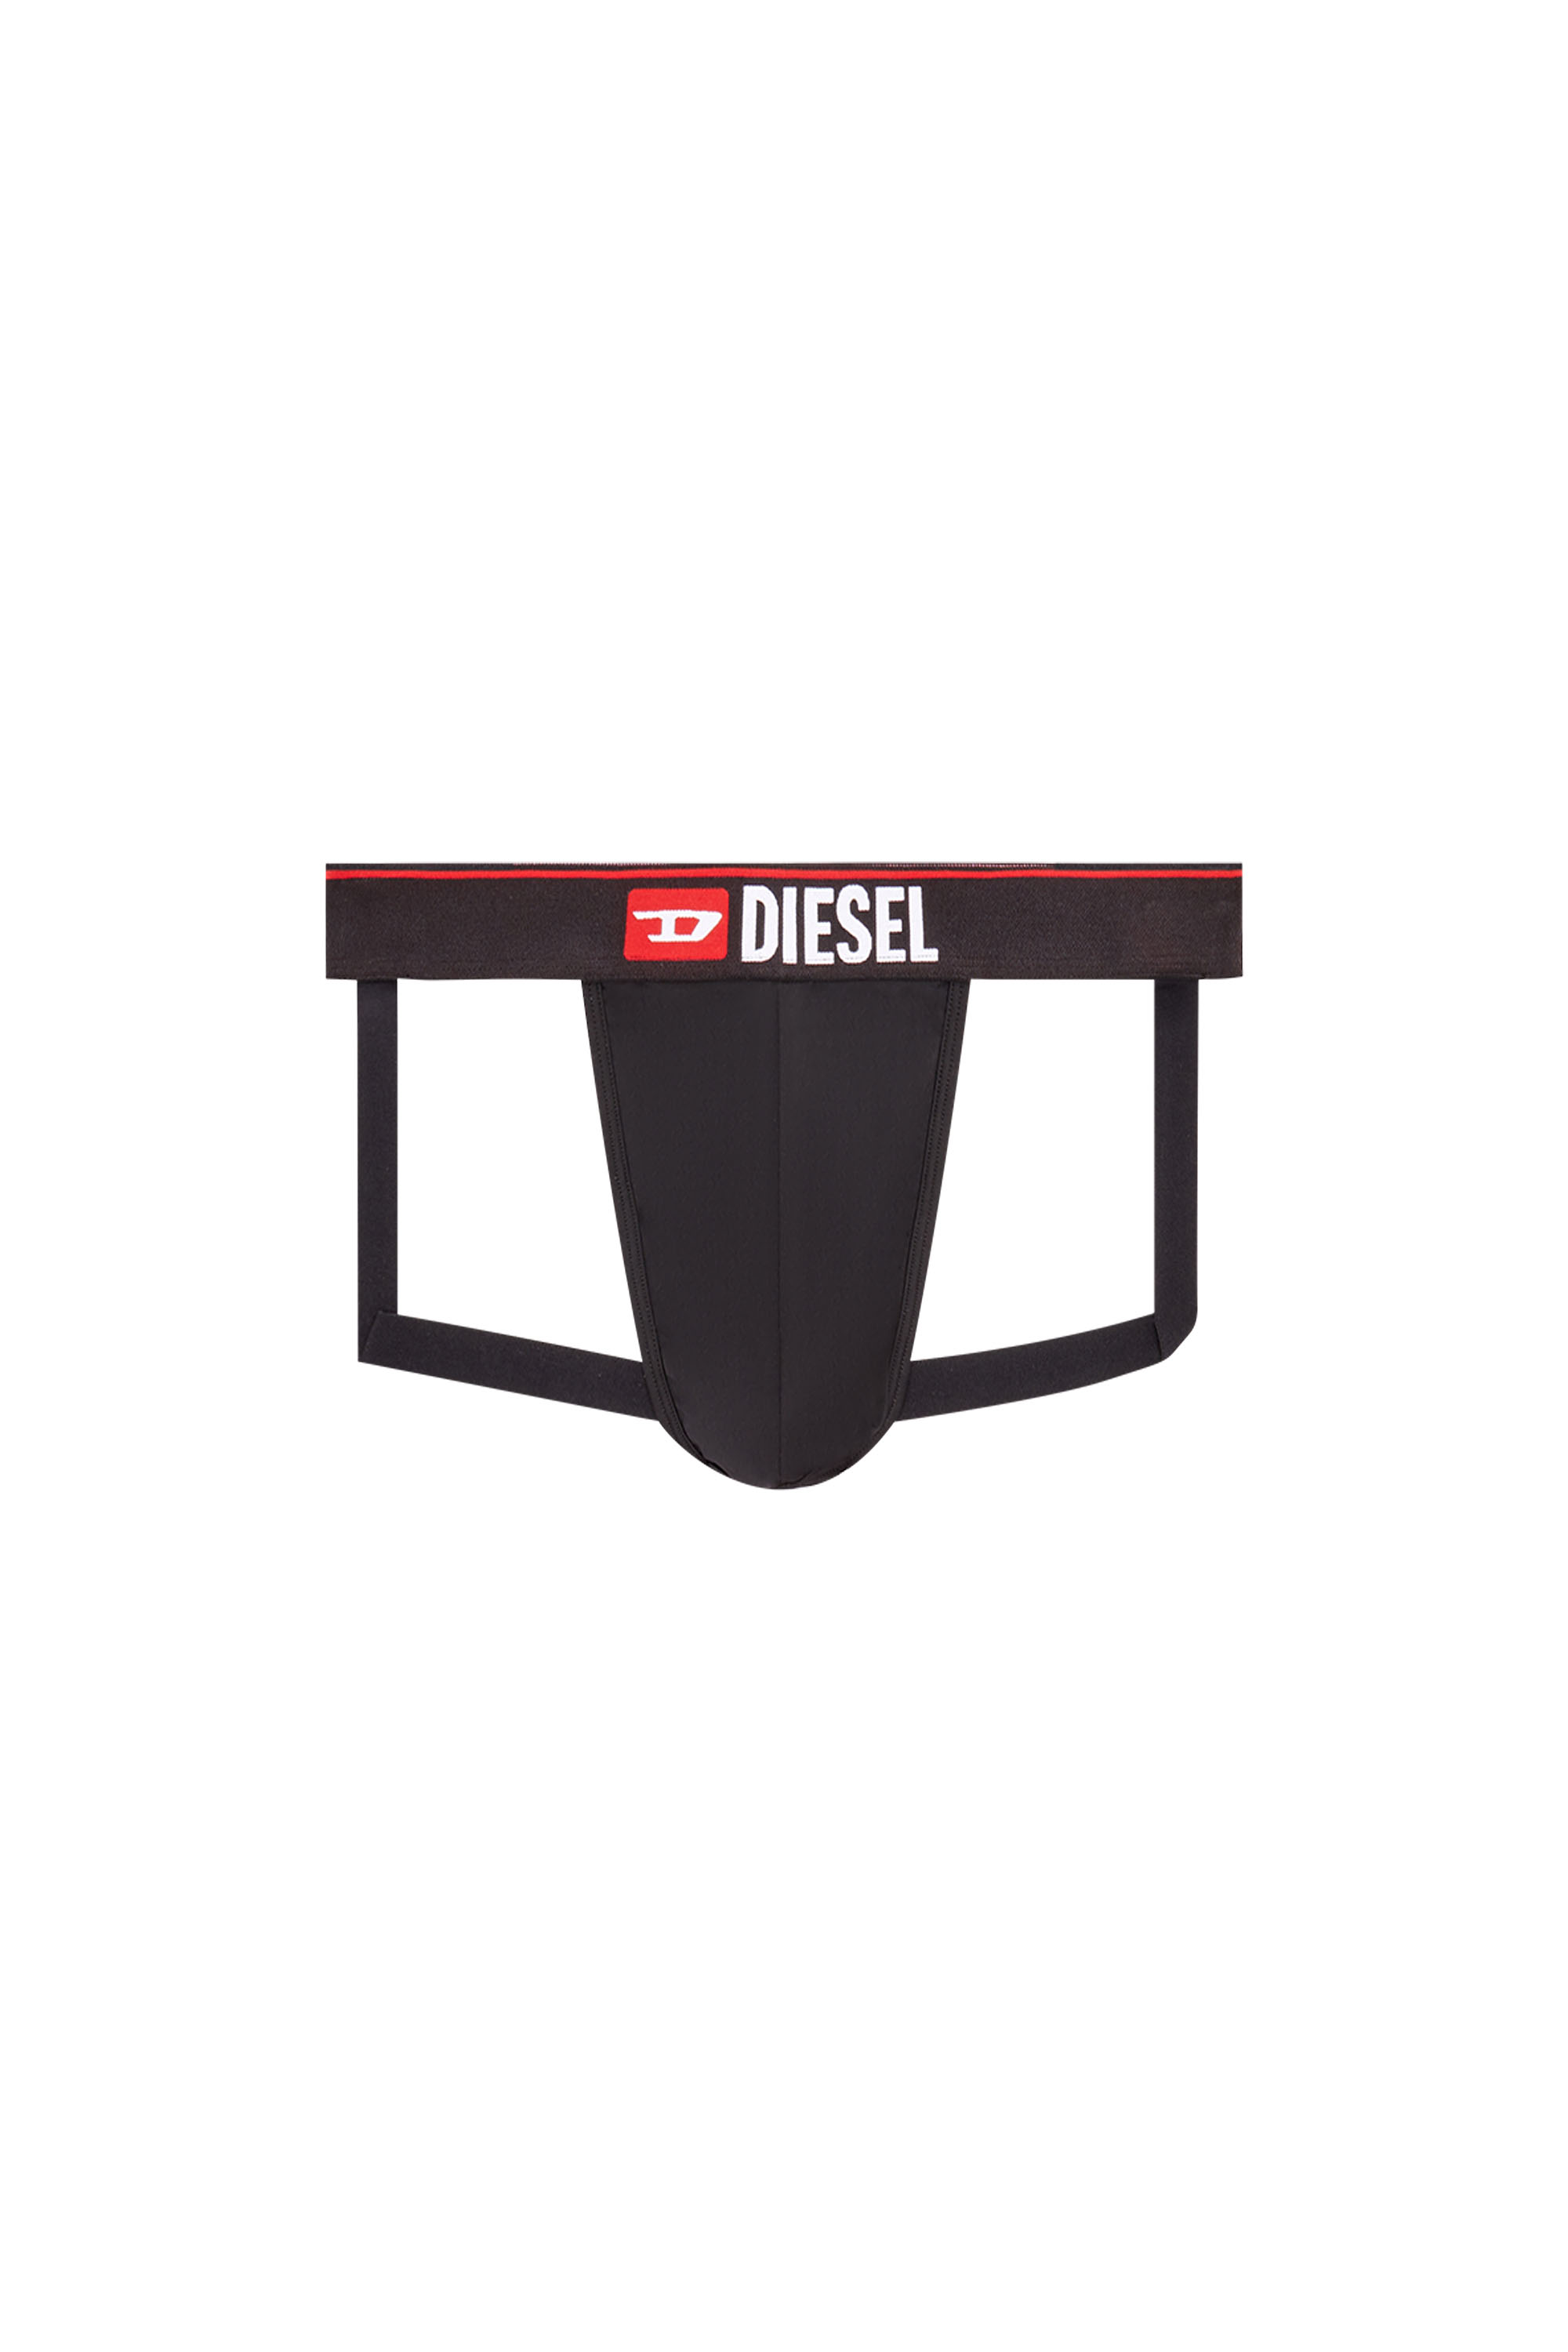 Diesel - UMBR-JOCKY, Black - Image 1